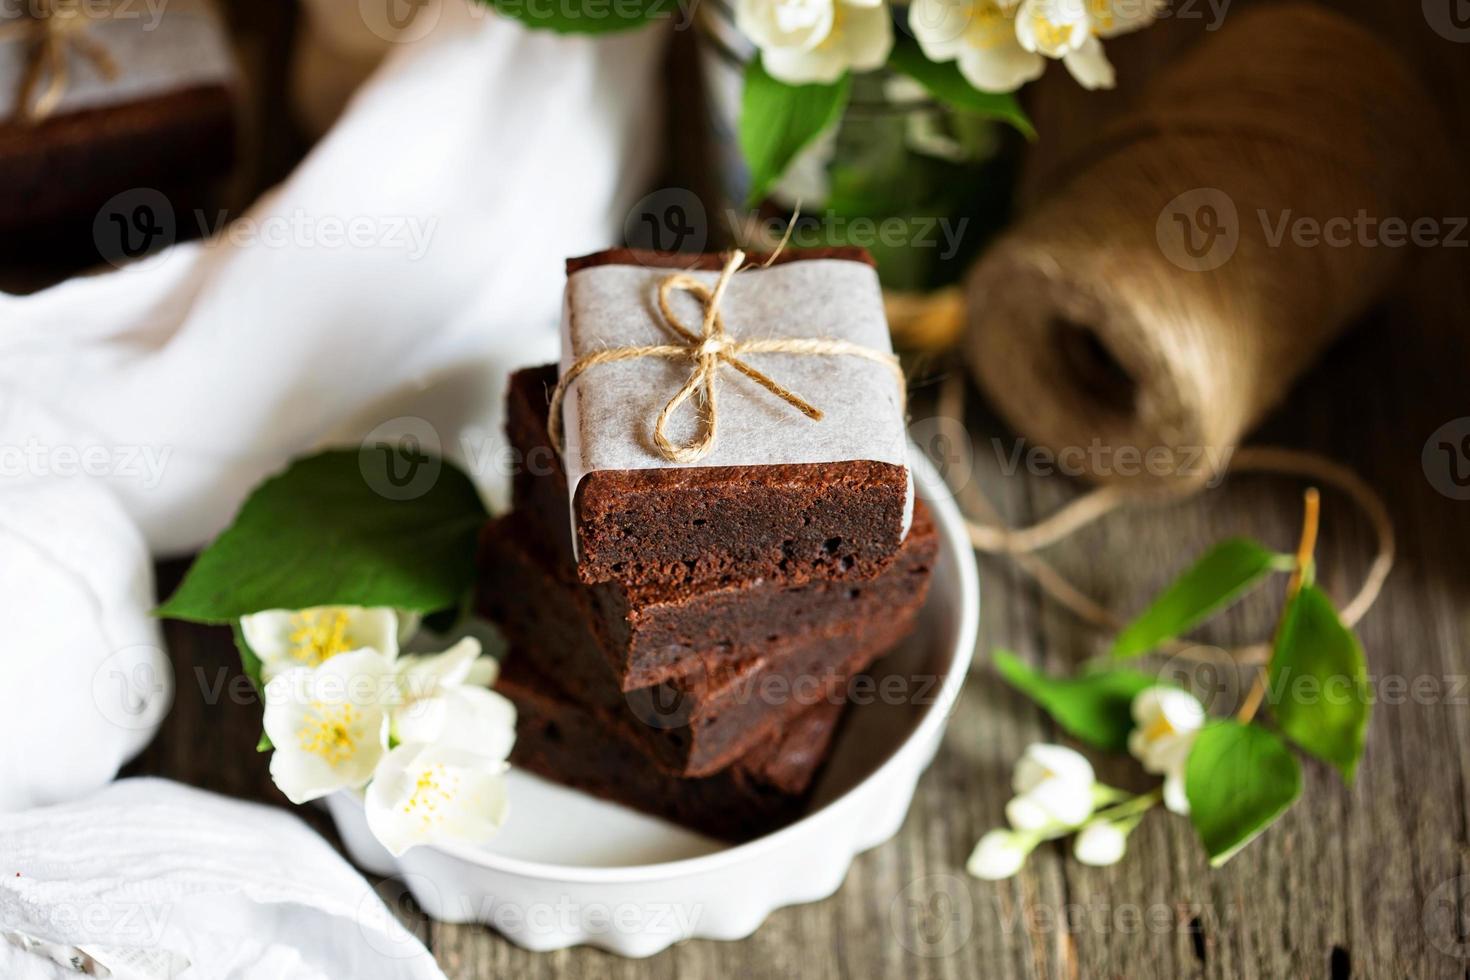 Schokoladen-Mascarpone-Brownies foto